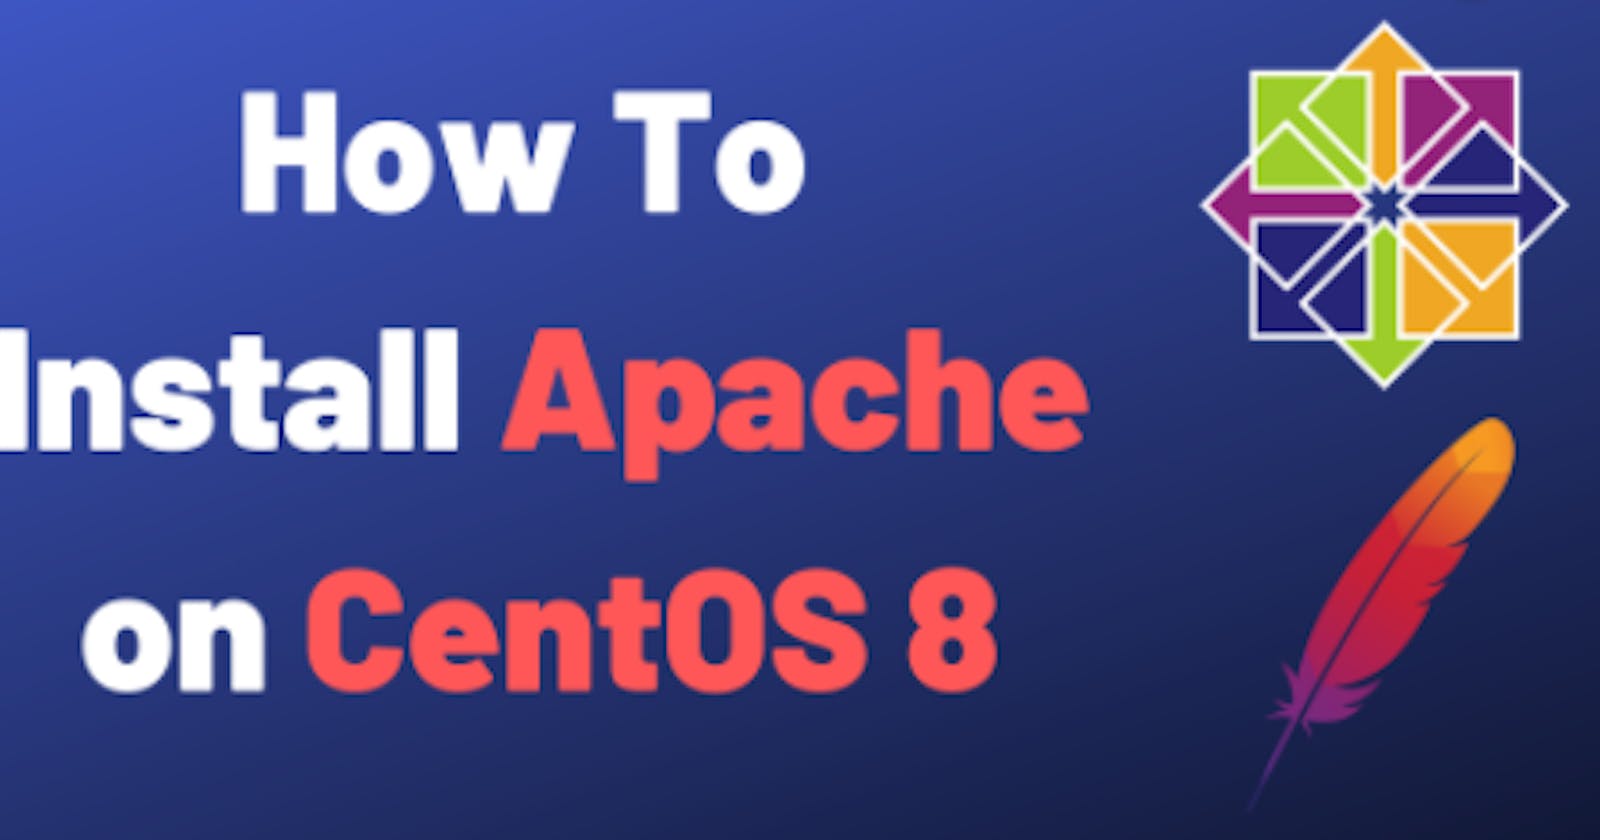 How To Install the Apache Web Server on CentOS 8